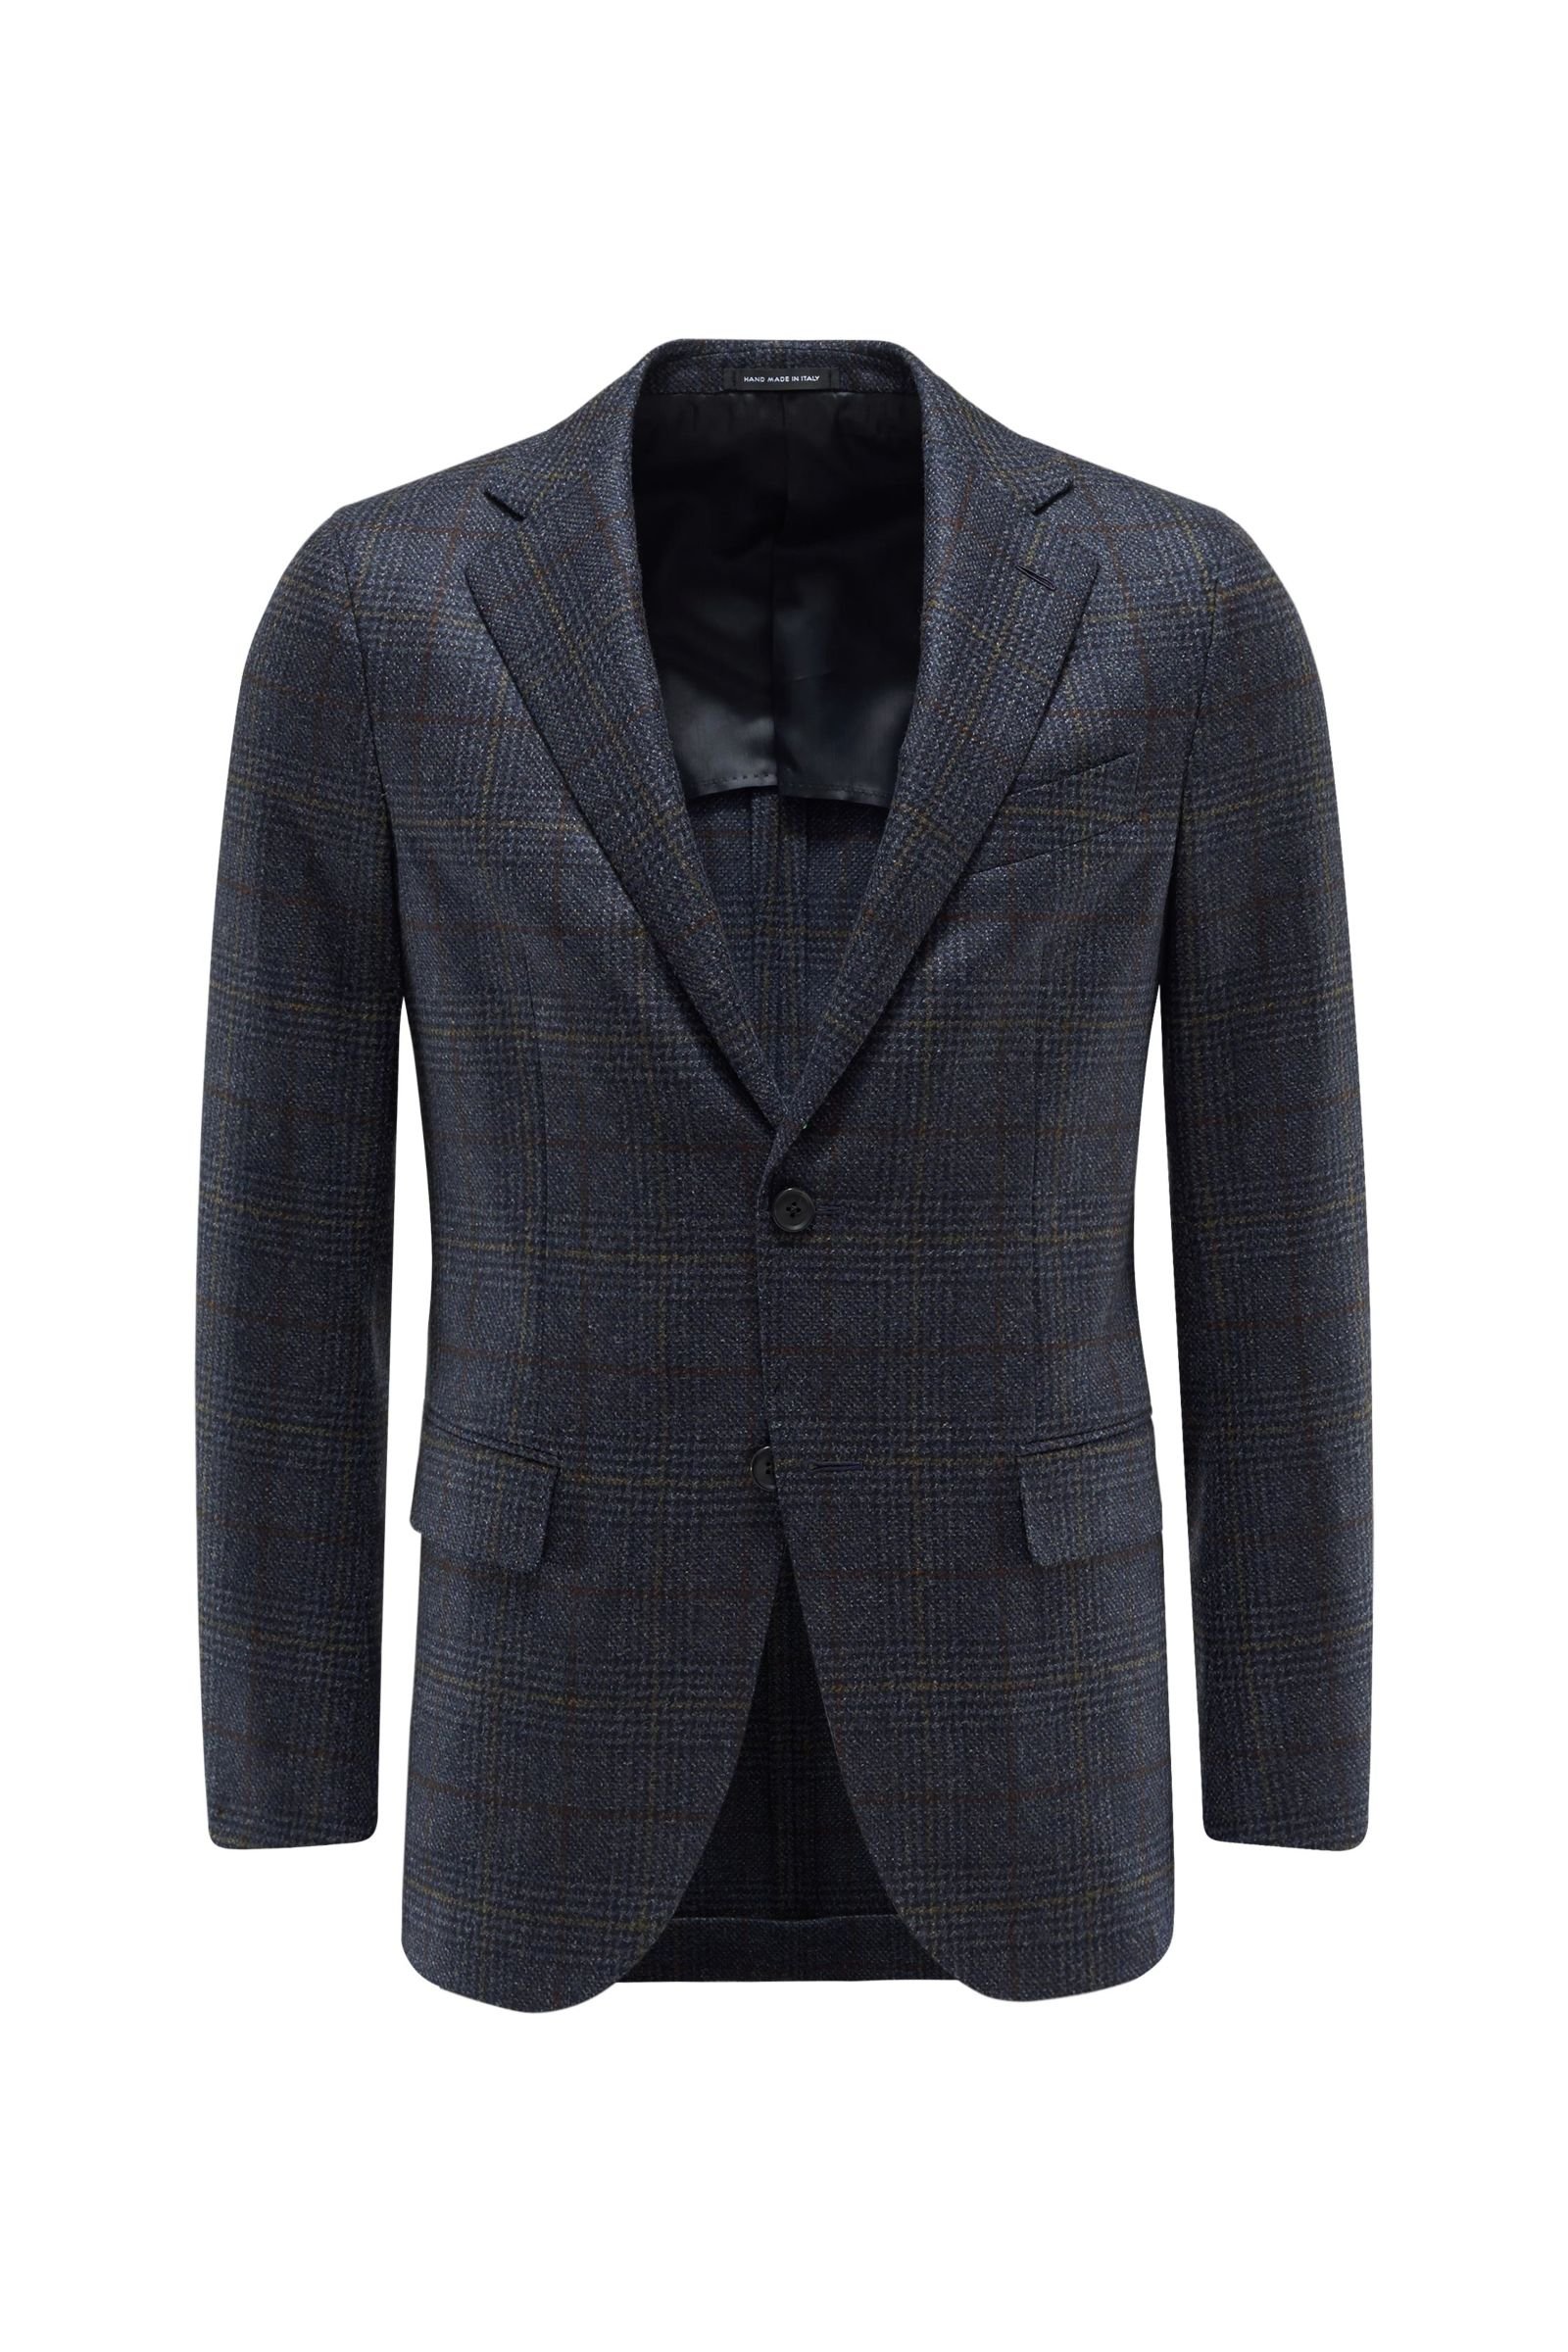 Smart-casual jacket dark blue checked